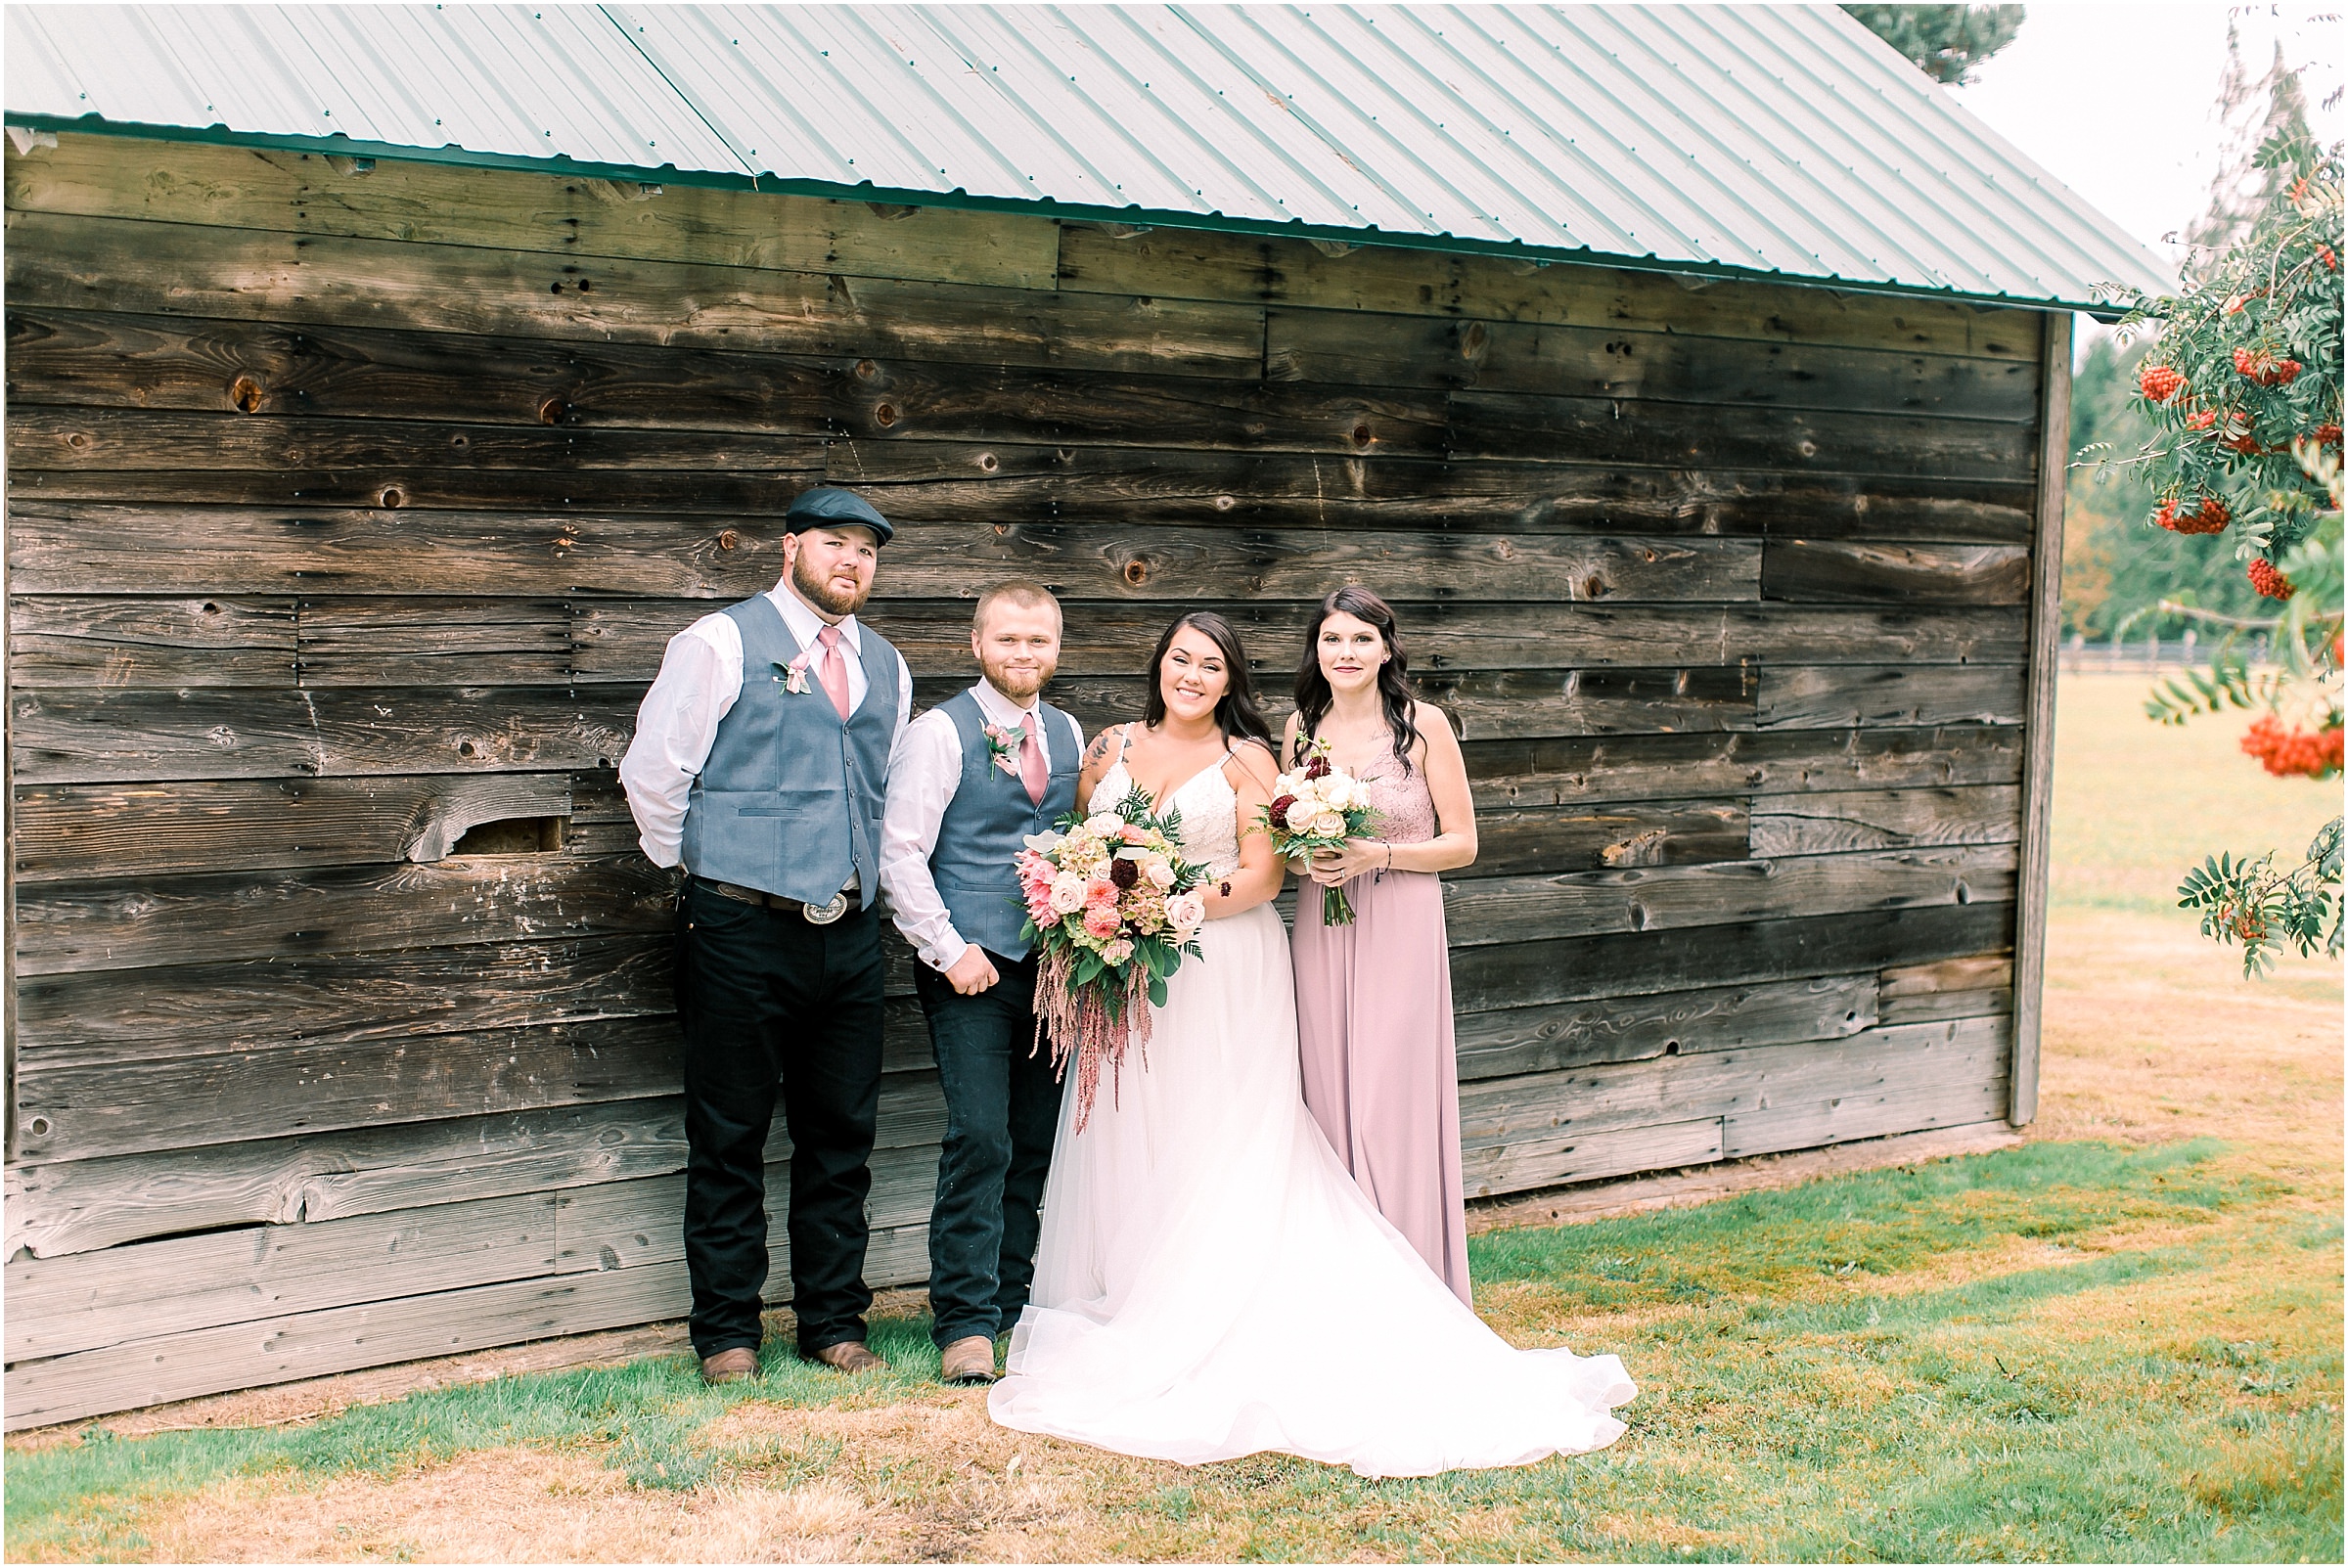 Intimate Backyard Wedding | Kristian & Brooke